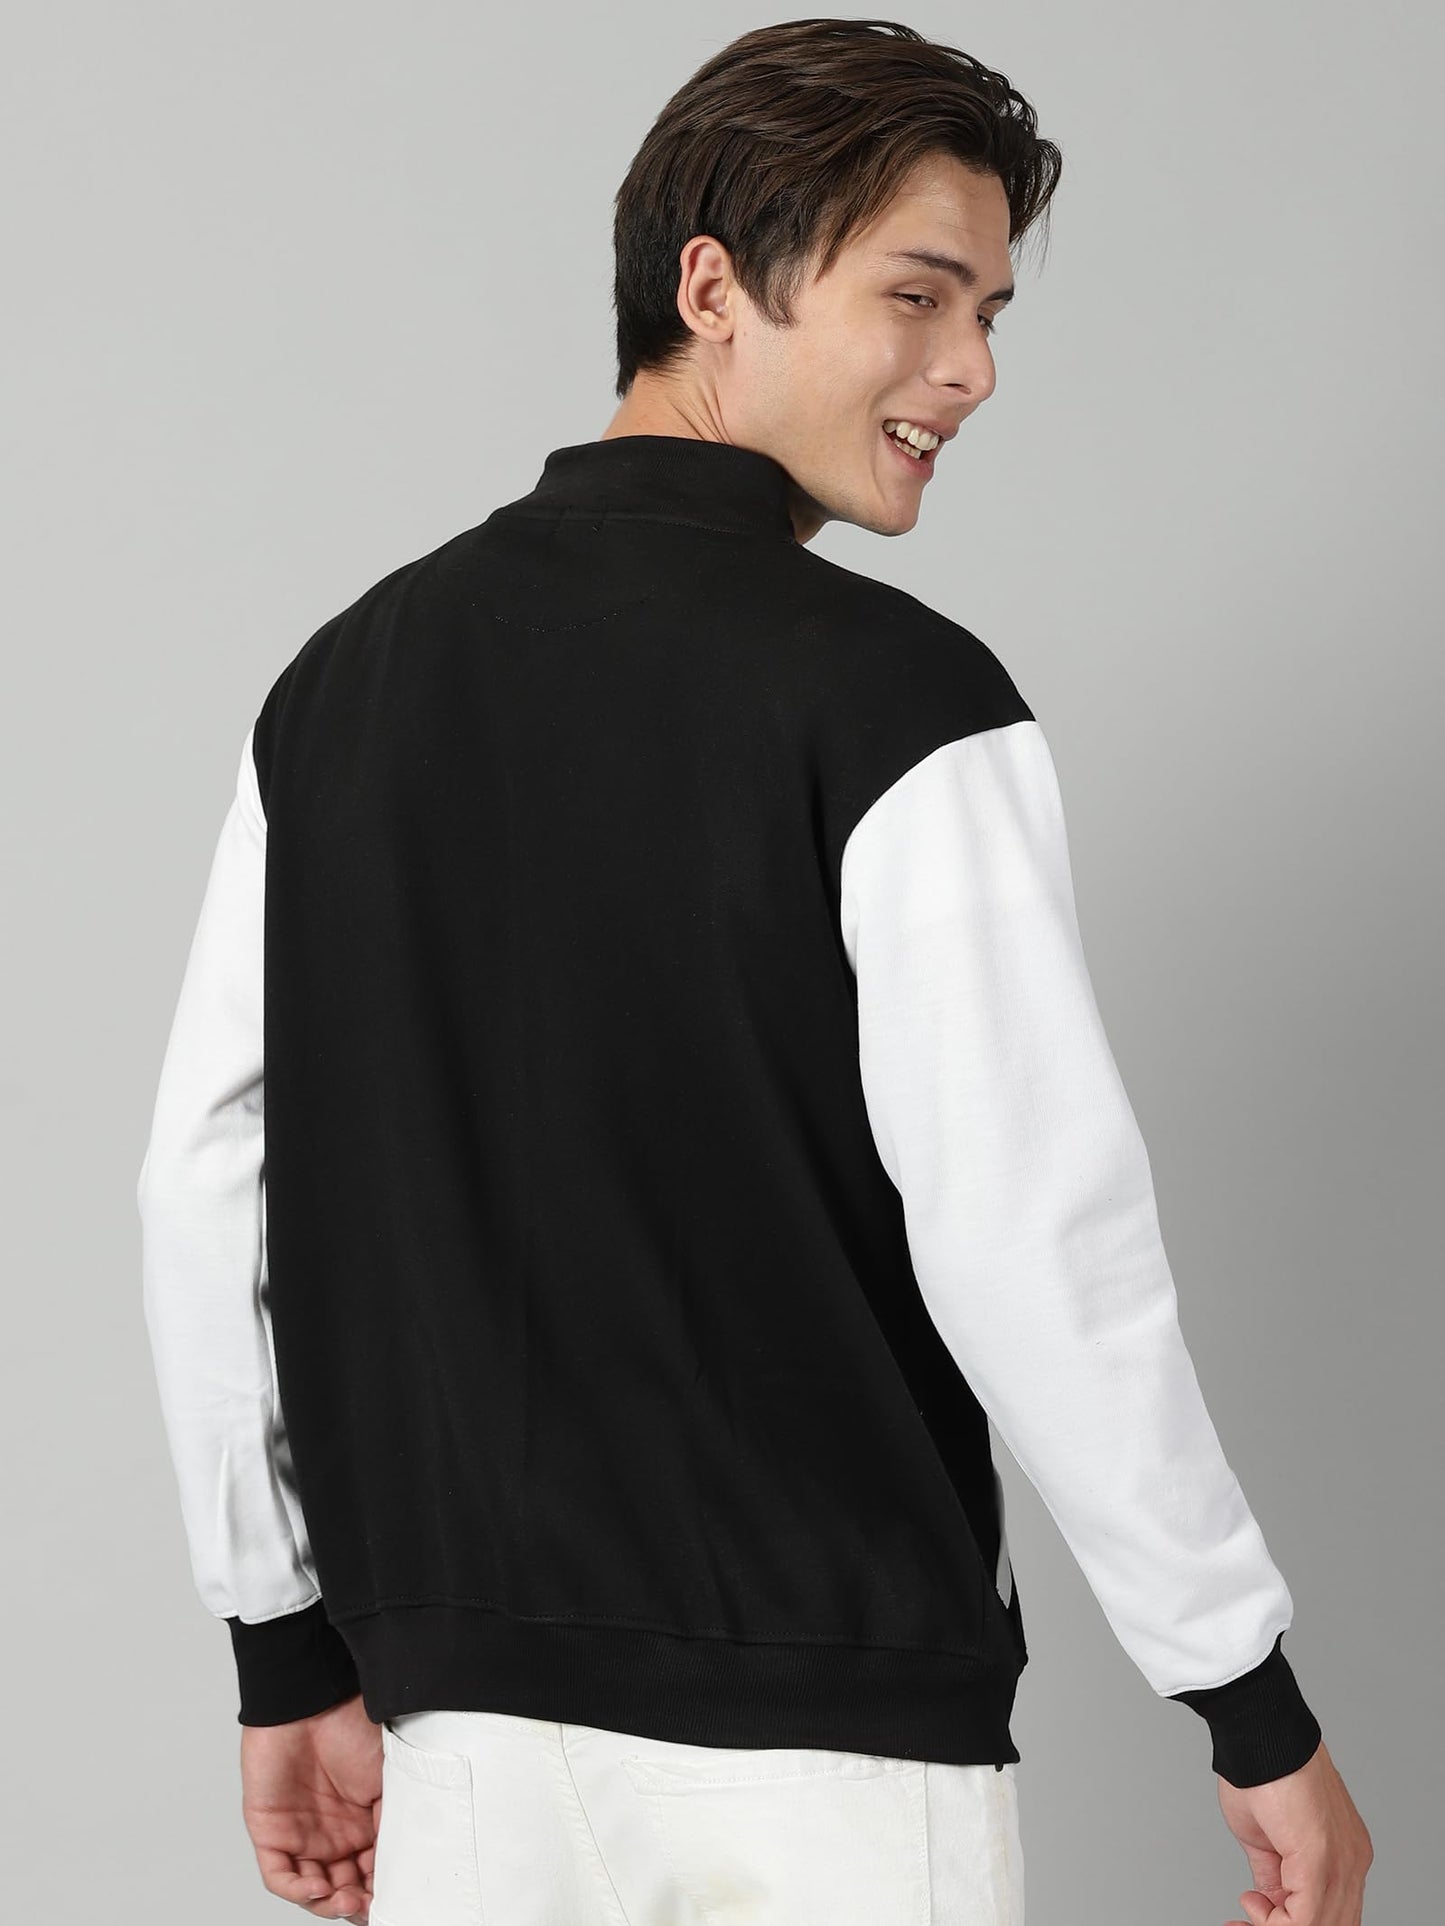 RodZen Men's Cotton Fleece Standard Length Varsity Regular Jacket (Large, Black)